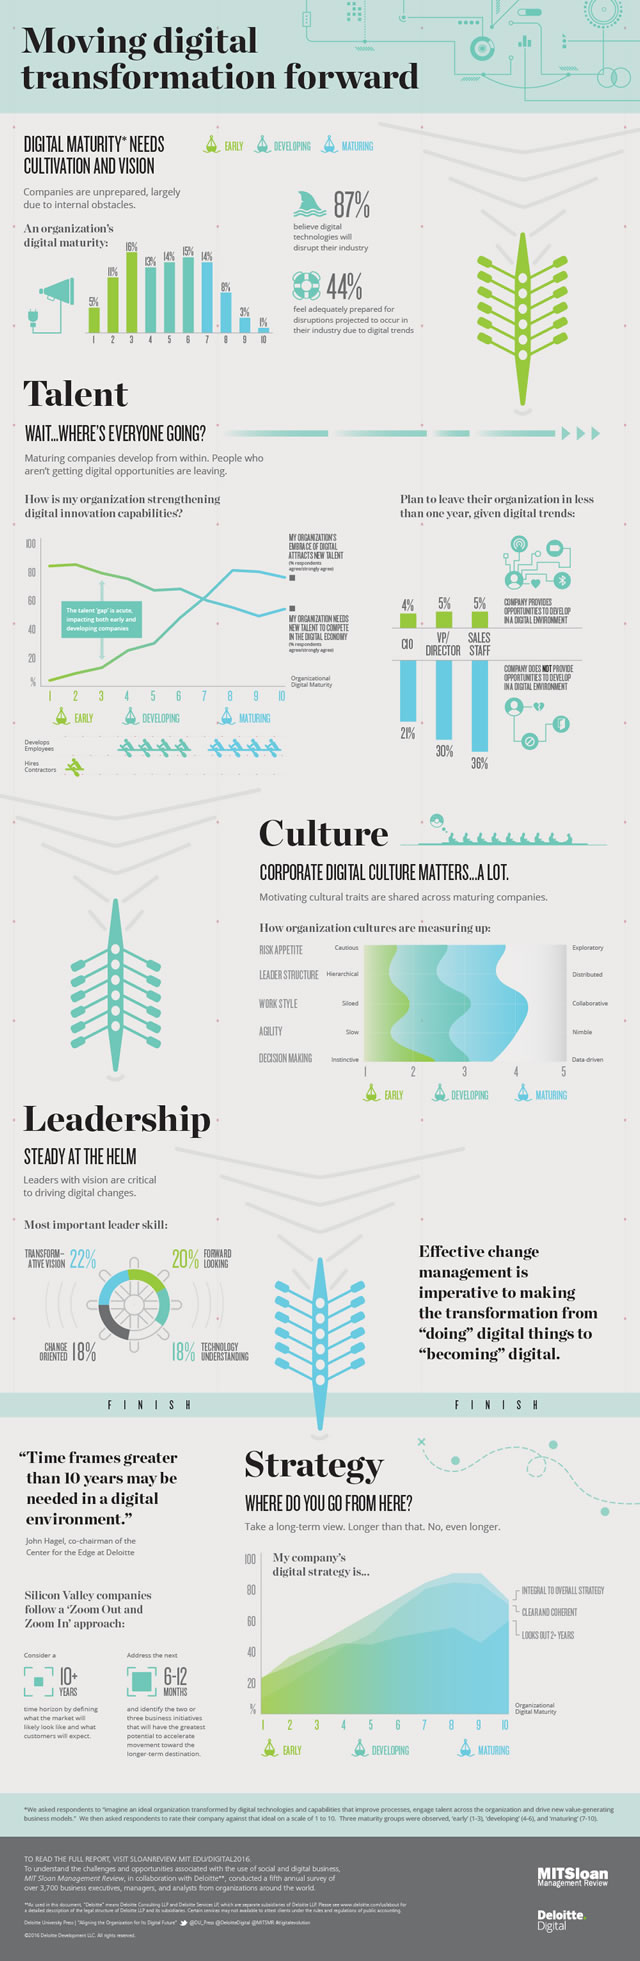 Digital transformation strategy - aligning the organization for its digital future - infographic Deloitte University Press 2016